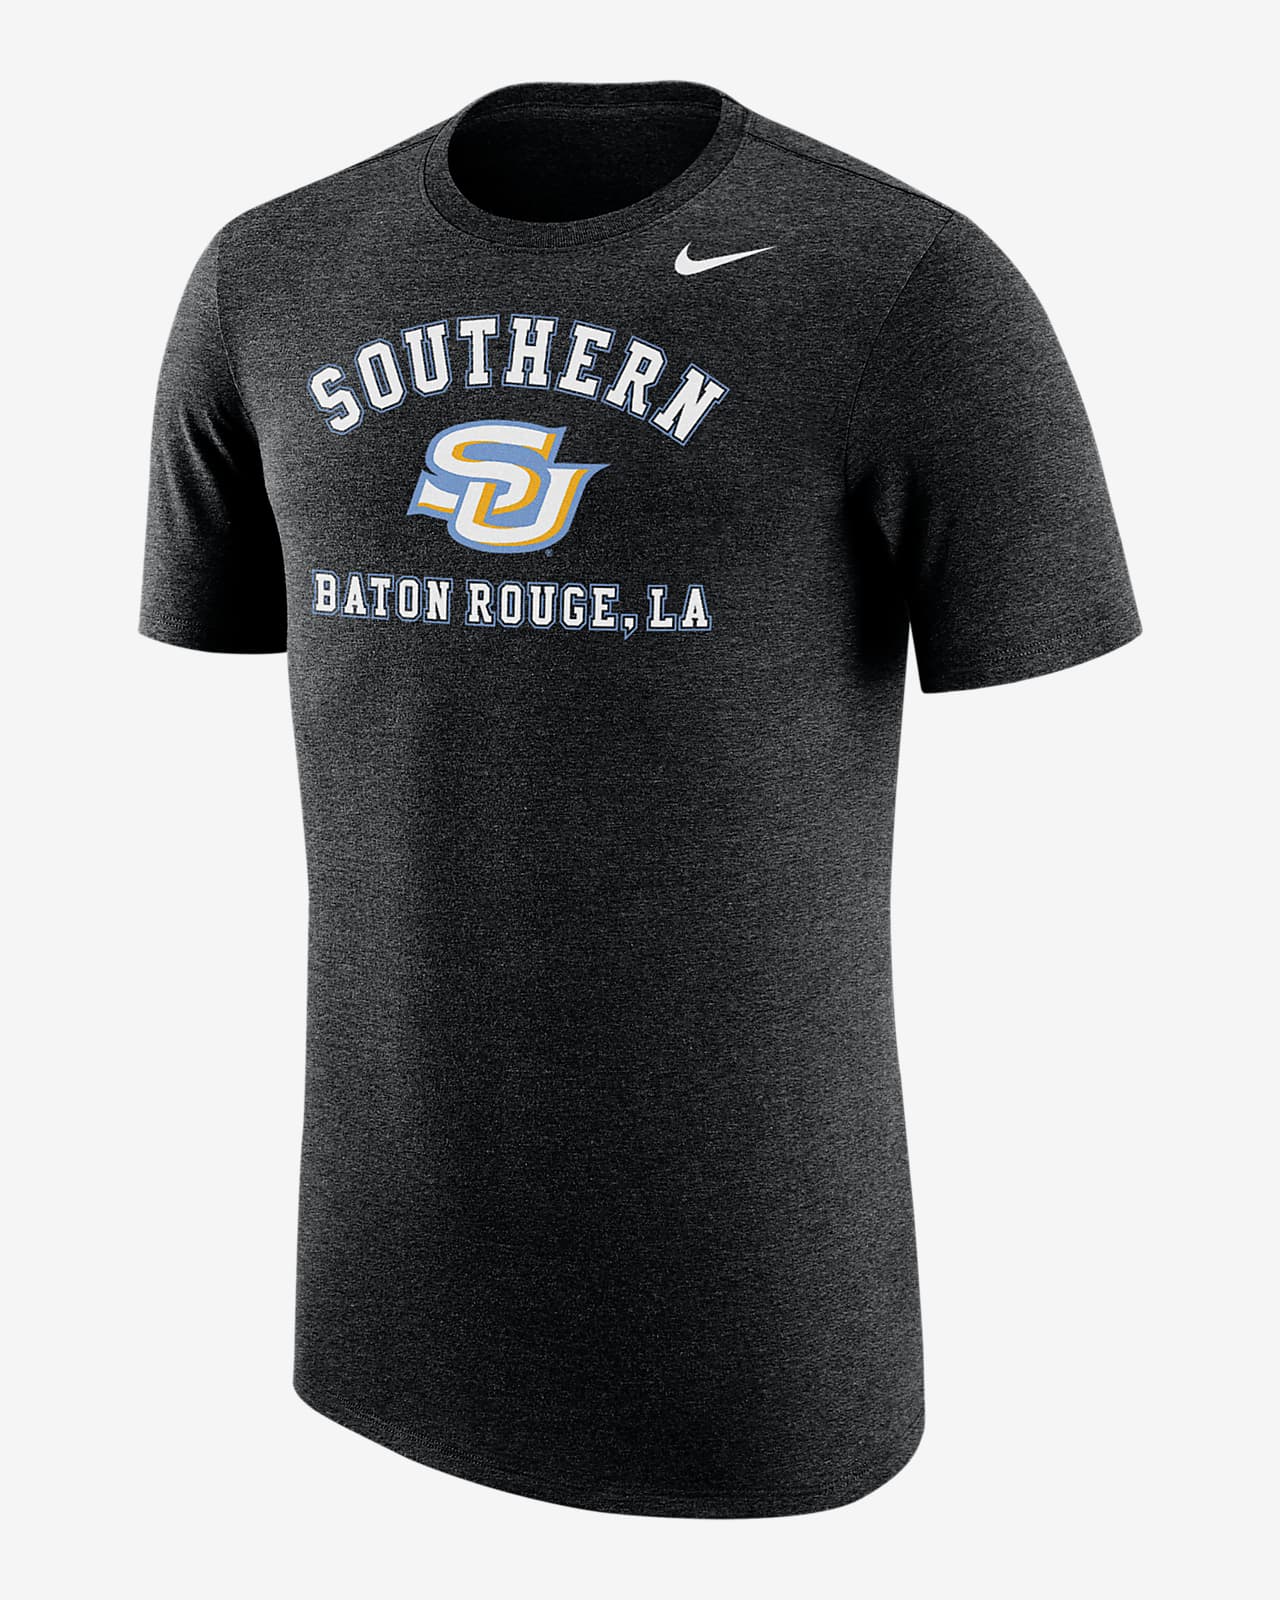 Southern Men's Nike College T-Shirt